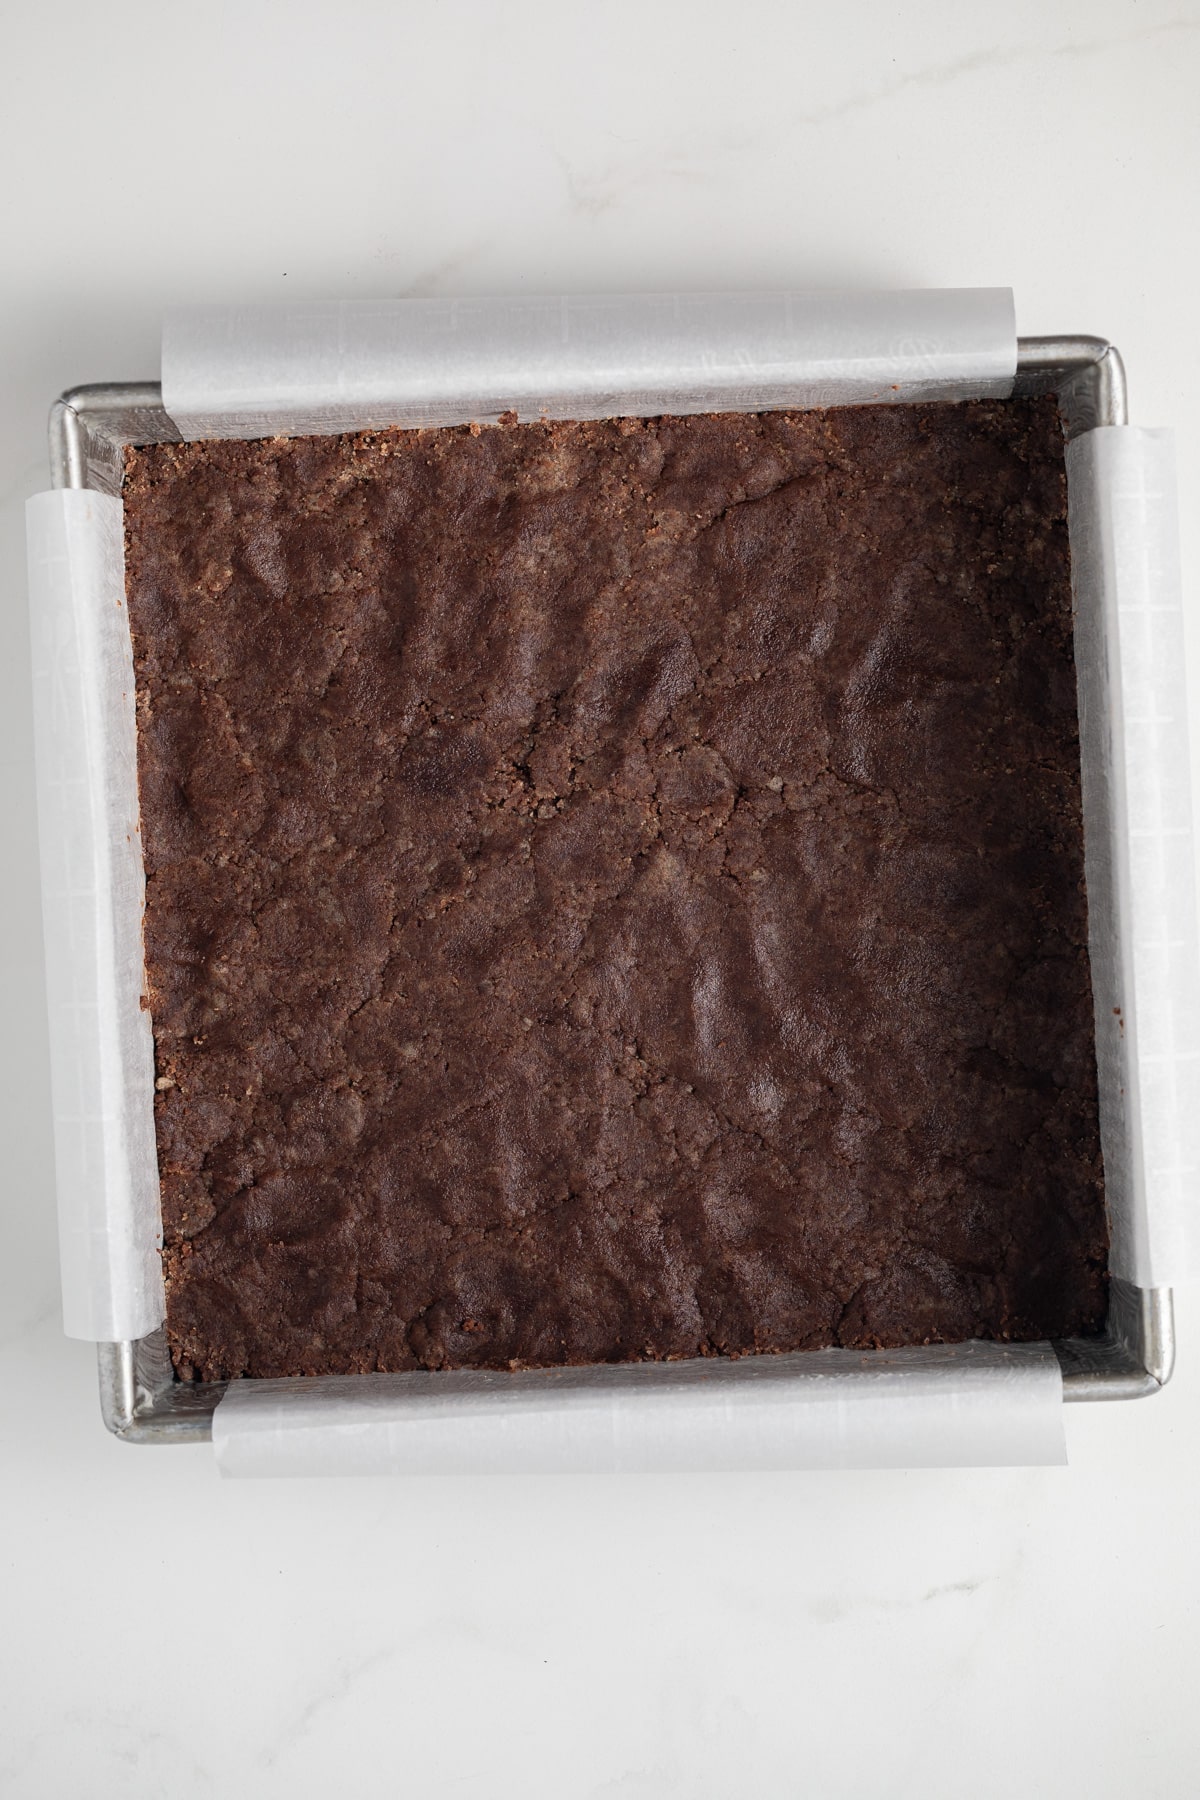 Unbaked chocolate crust.